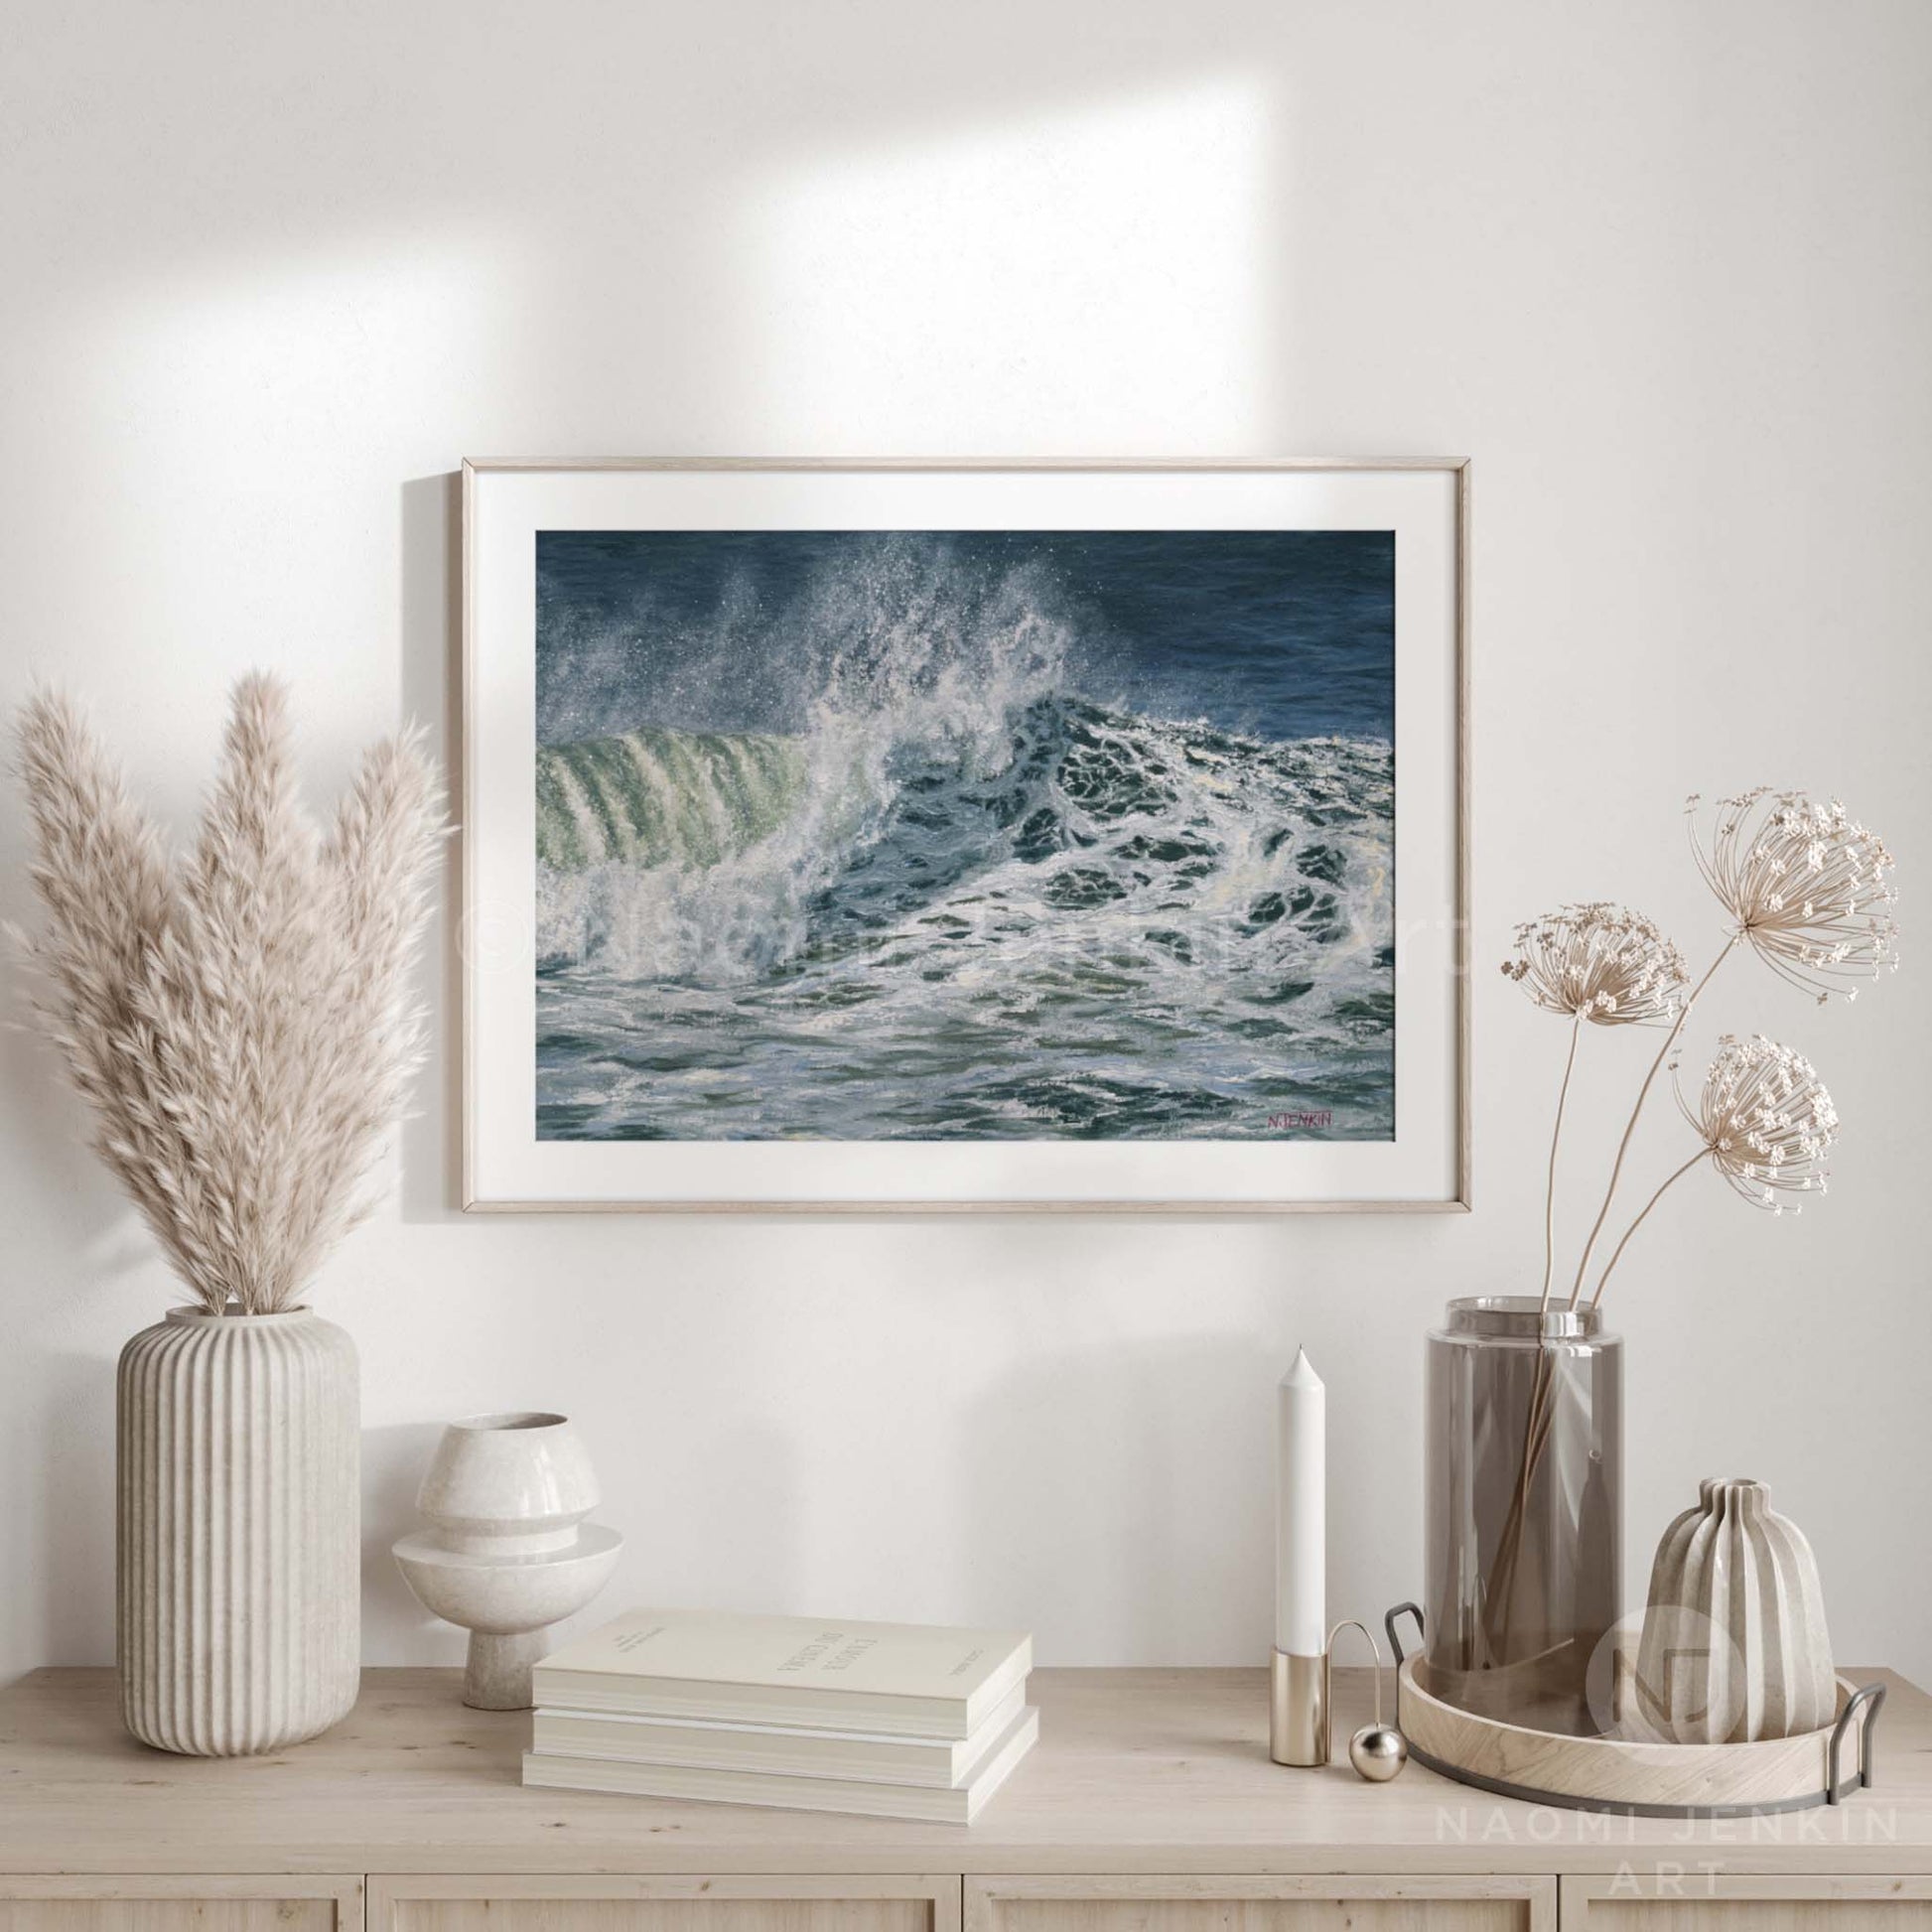 Framed fine art seascape print 'Froth and Spray” on a shelf setting 